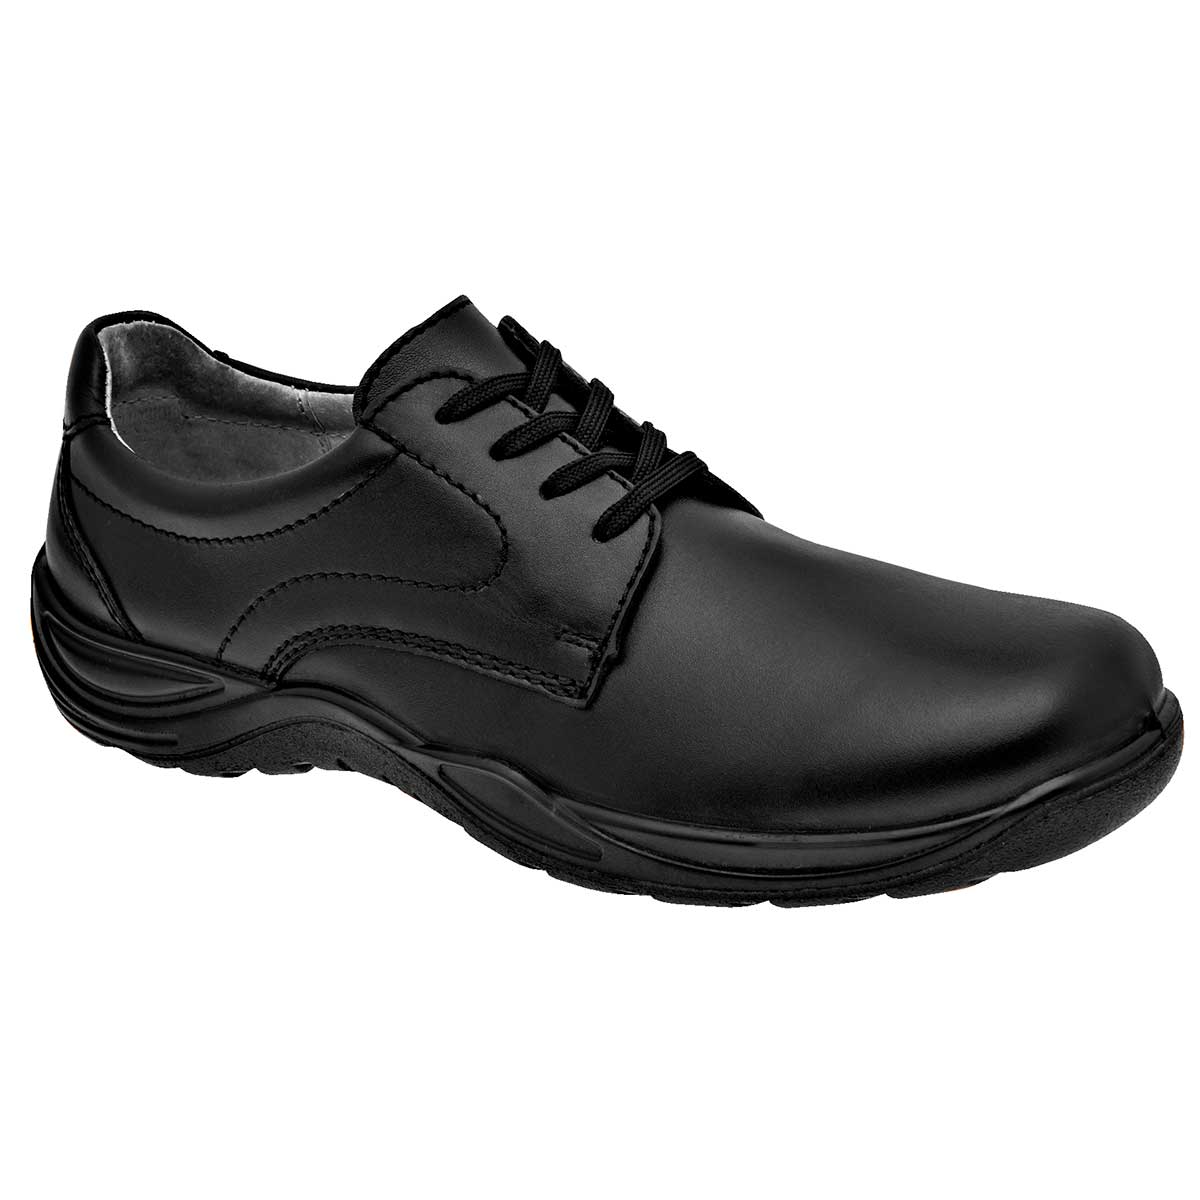 Pakar.com - Mayo: Regalos para mamá | Zapato casual para joven cod-97535